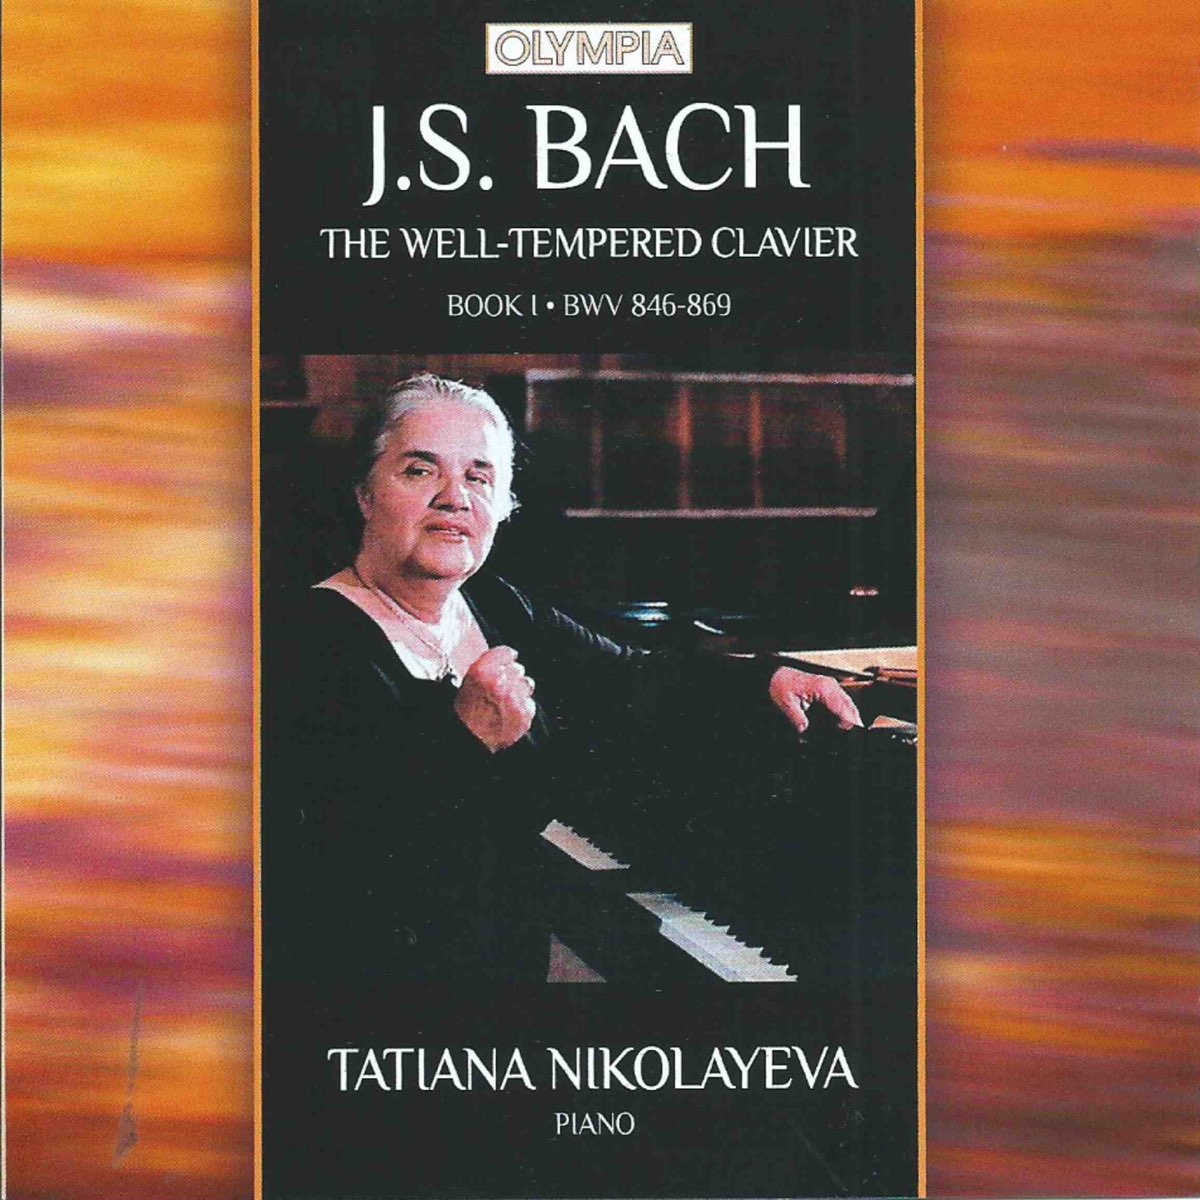 J.S. Bach: The Well-Tempered Clavier. Book I - Album by Tatiana Nikolayeva  - Apple Music